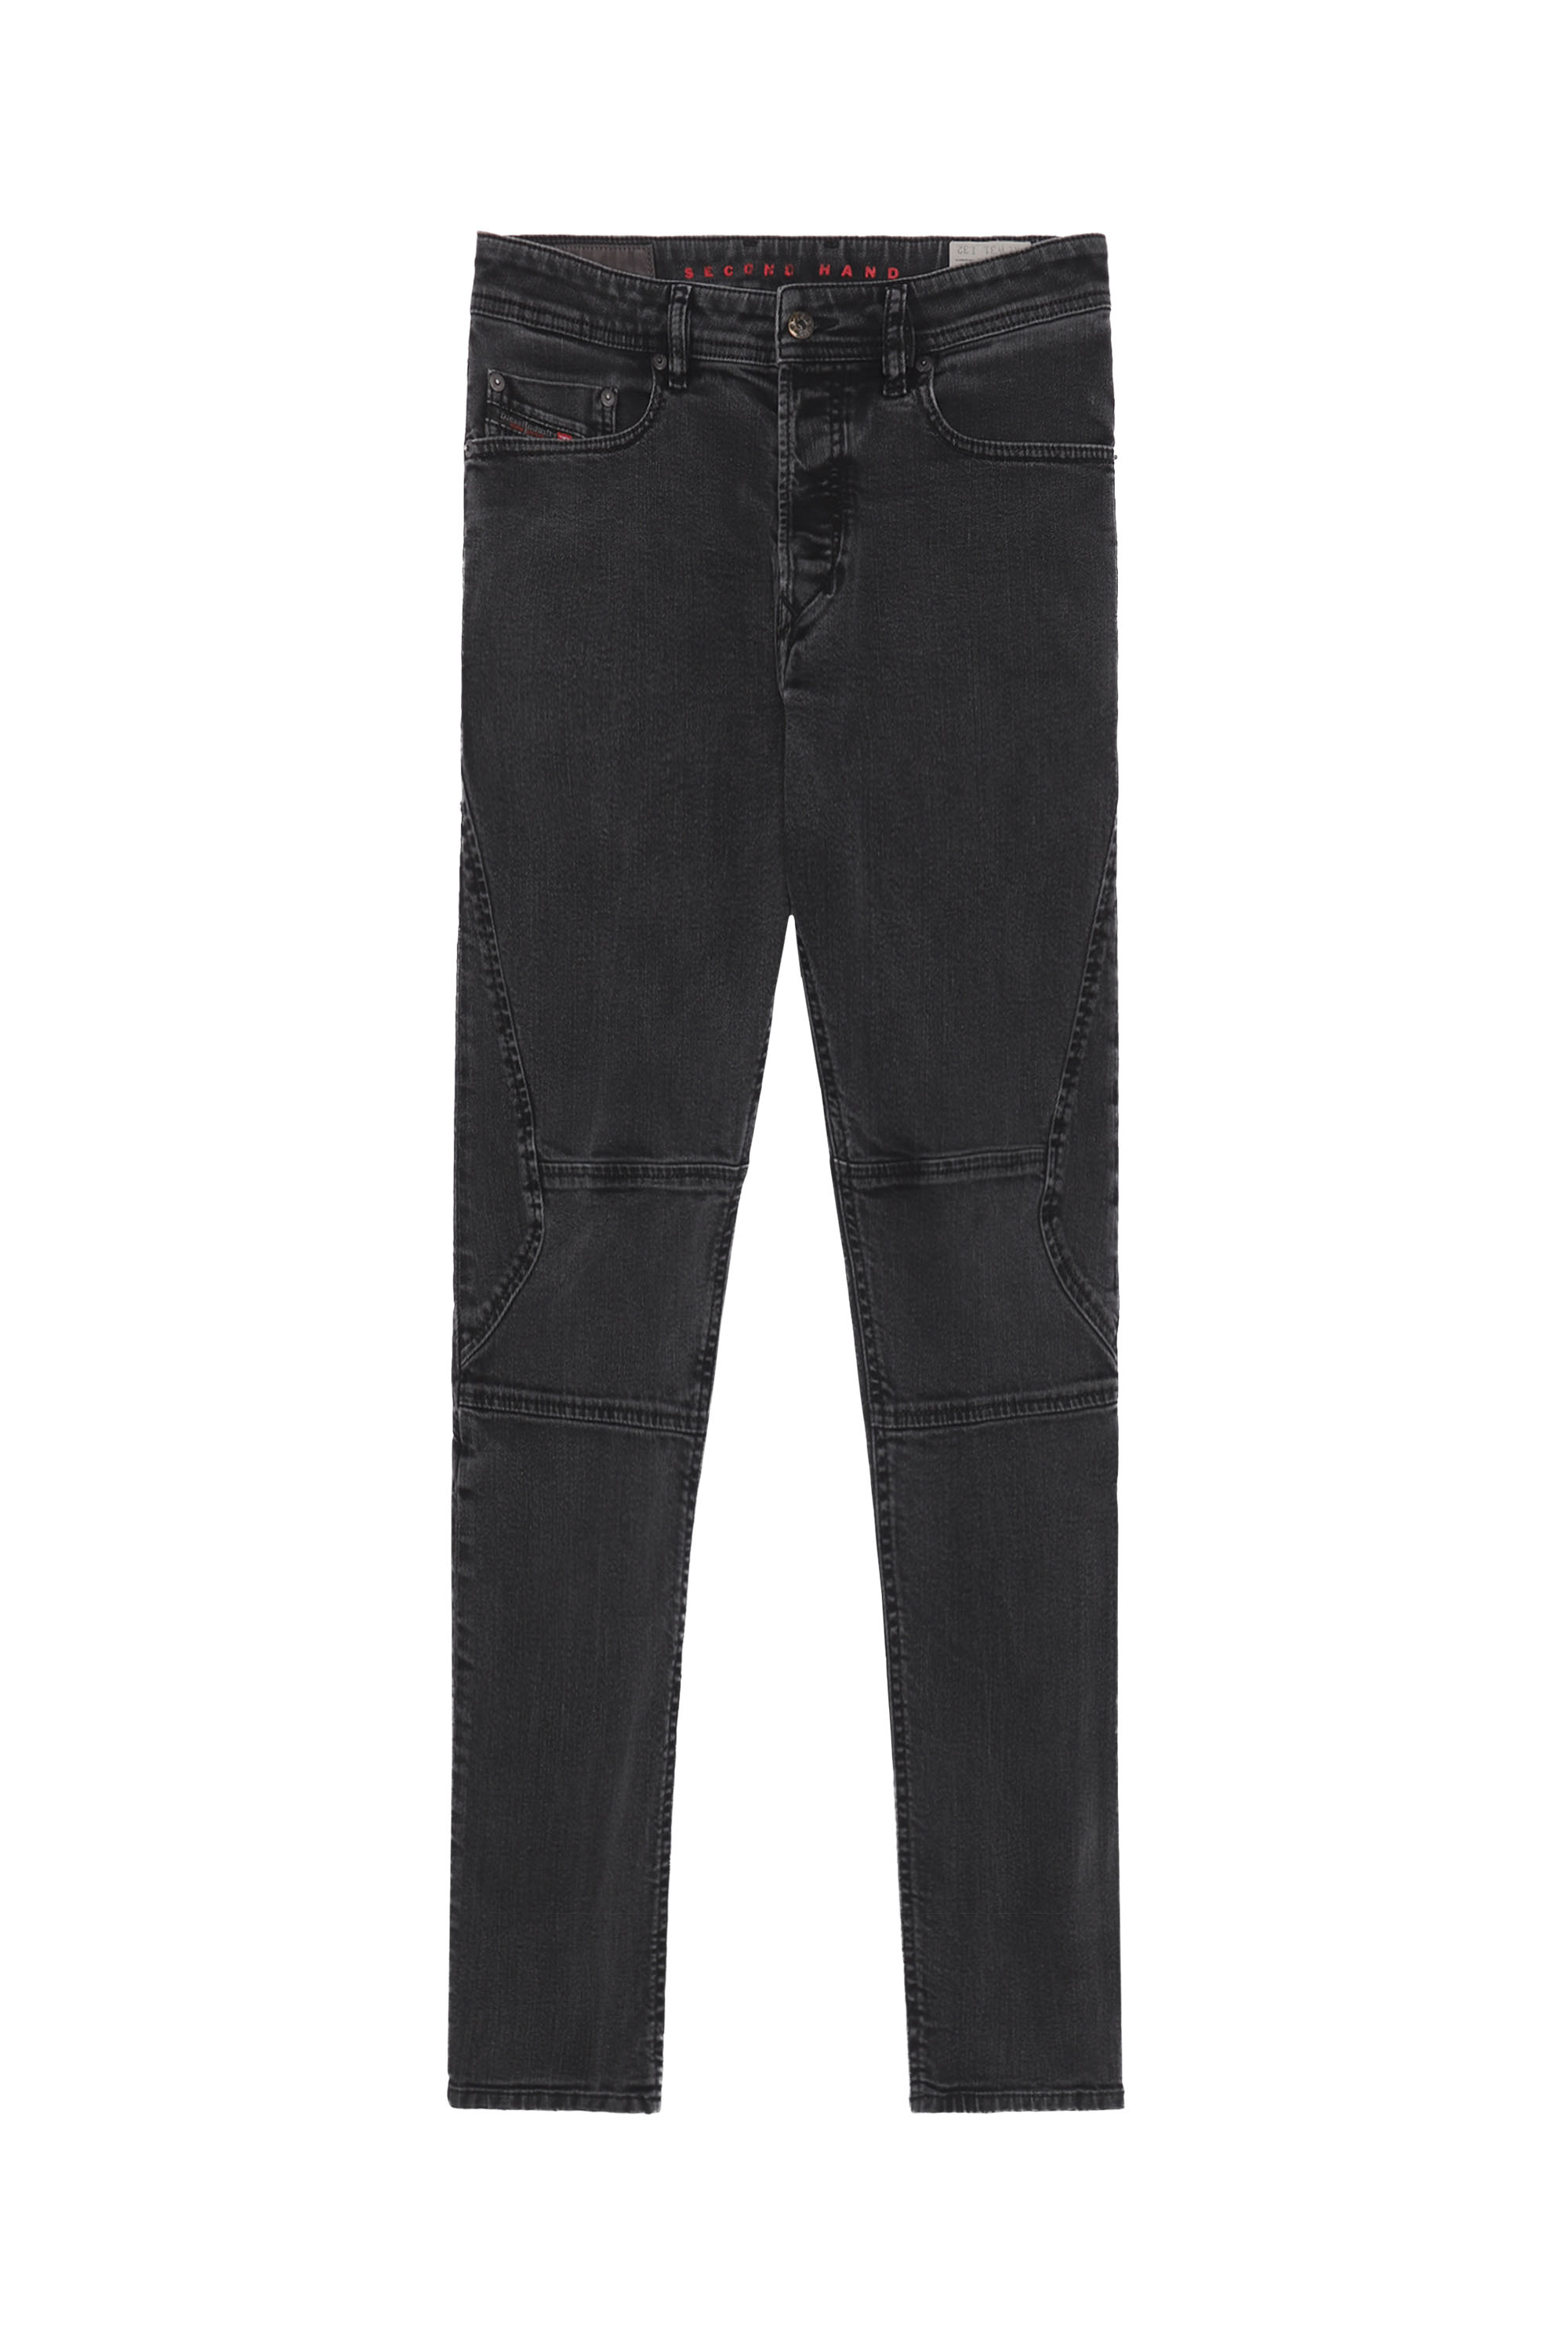 T-RIDE, Black/Dark grey - Jeans